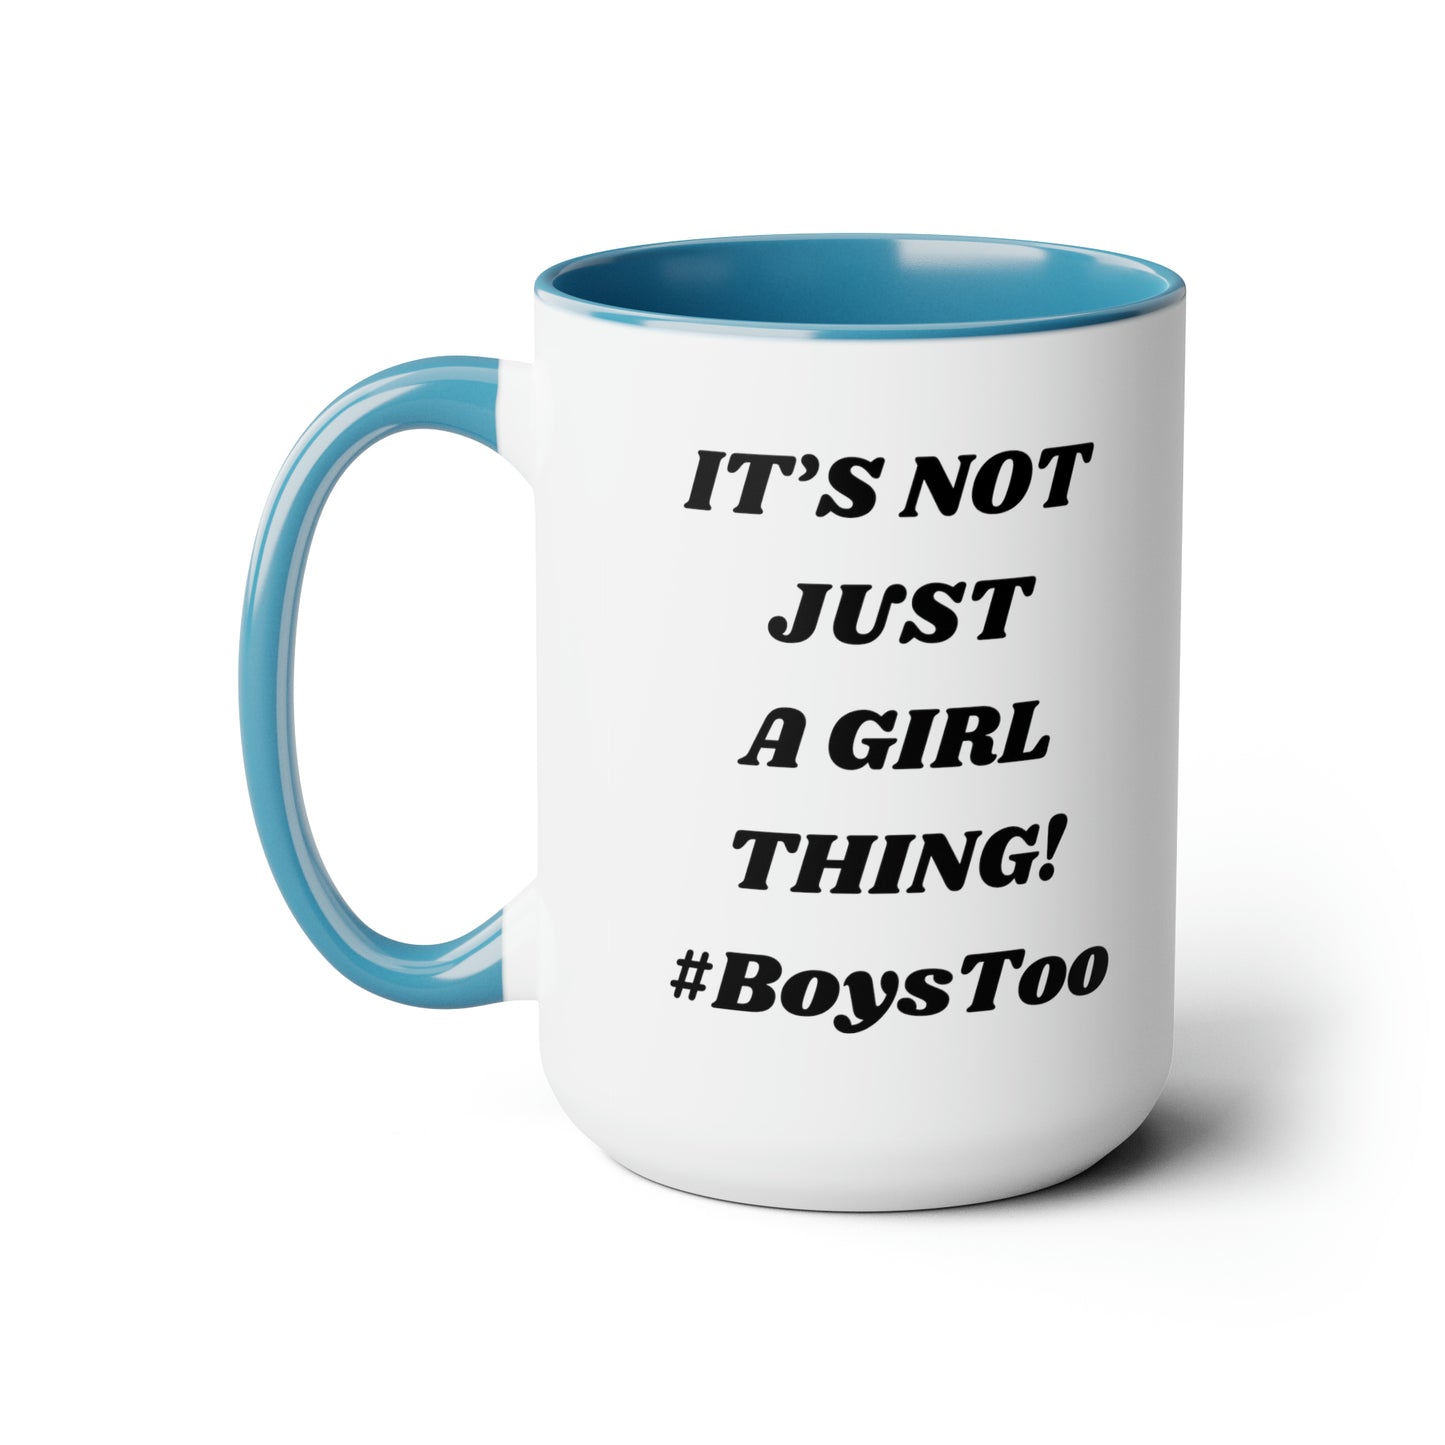 Not Just a Girl Thing ~ Black Txt Two-Tone Coffee Mugs, 15oz